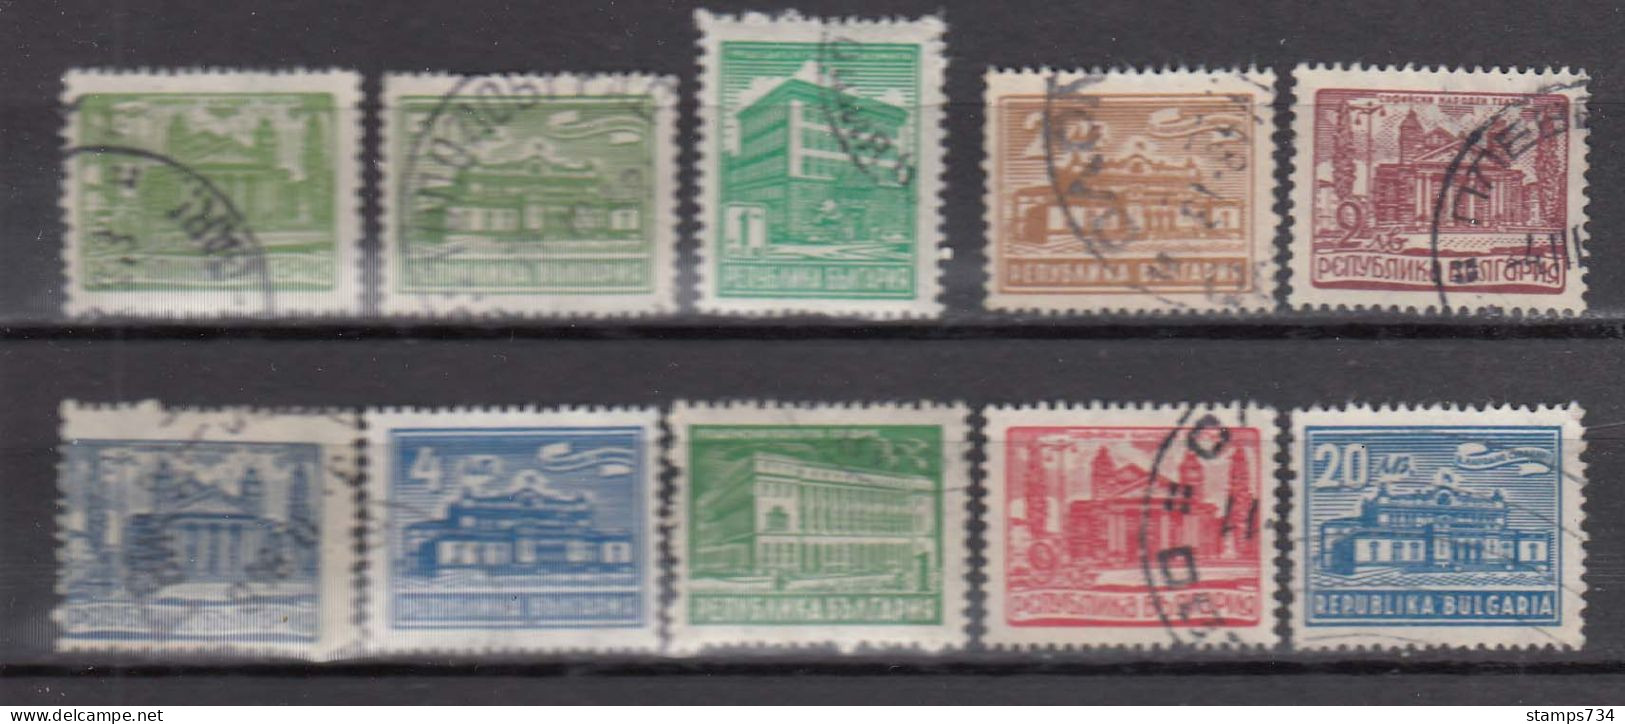 Bulgaria 1947/48 - Freimarken: Architekture, Mi-Nr.  631/40, Used - Used Stamps